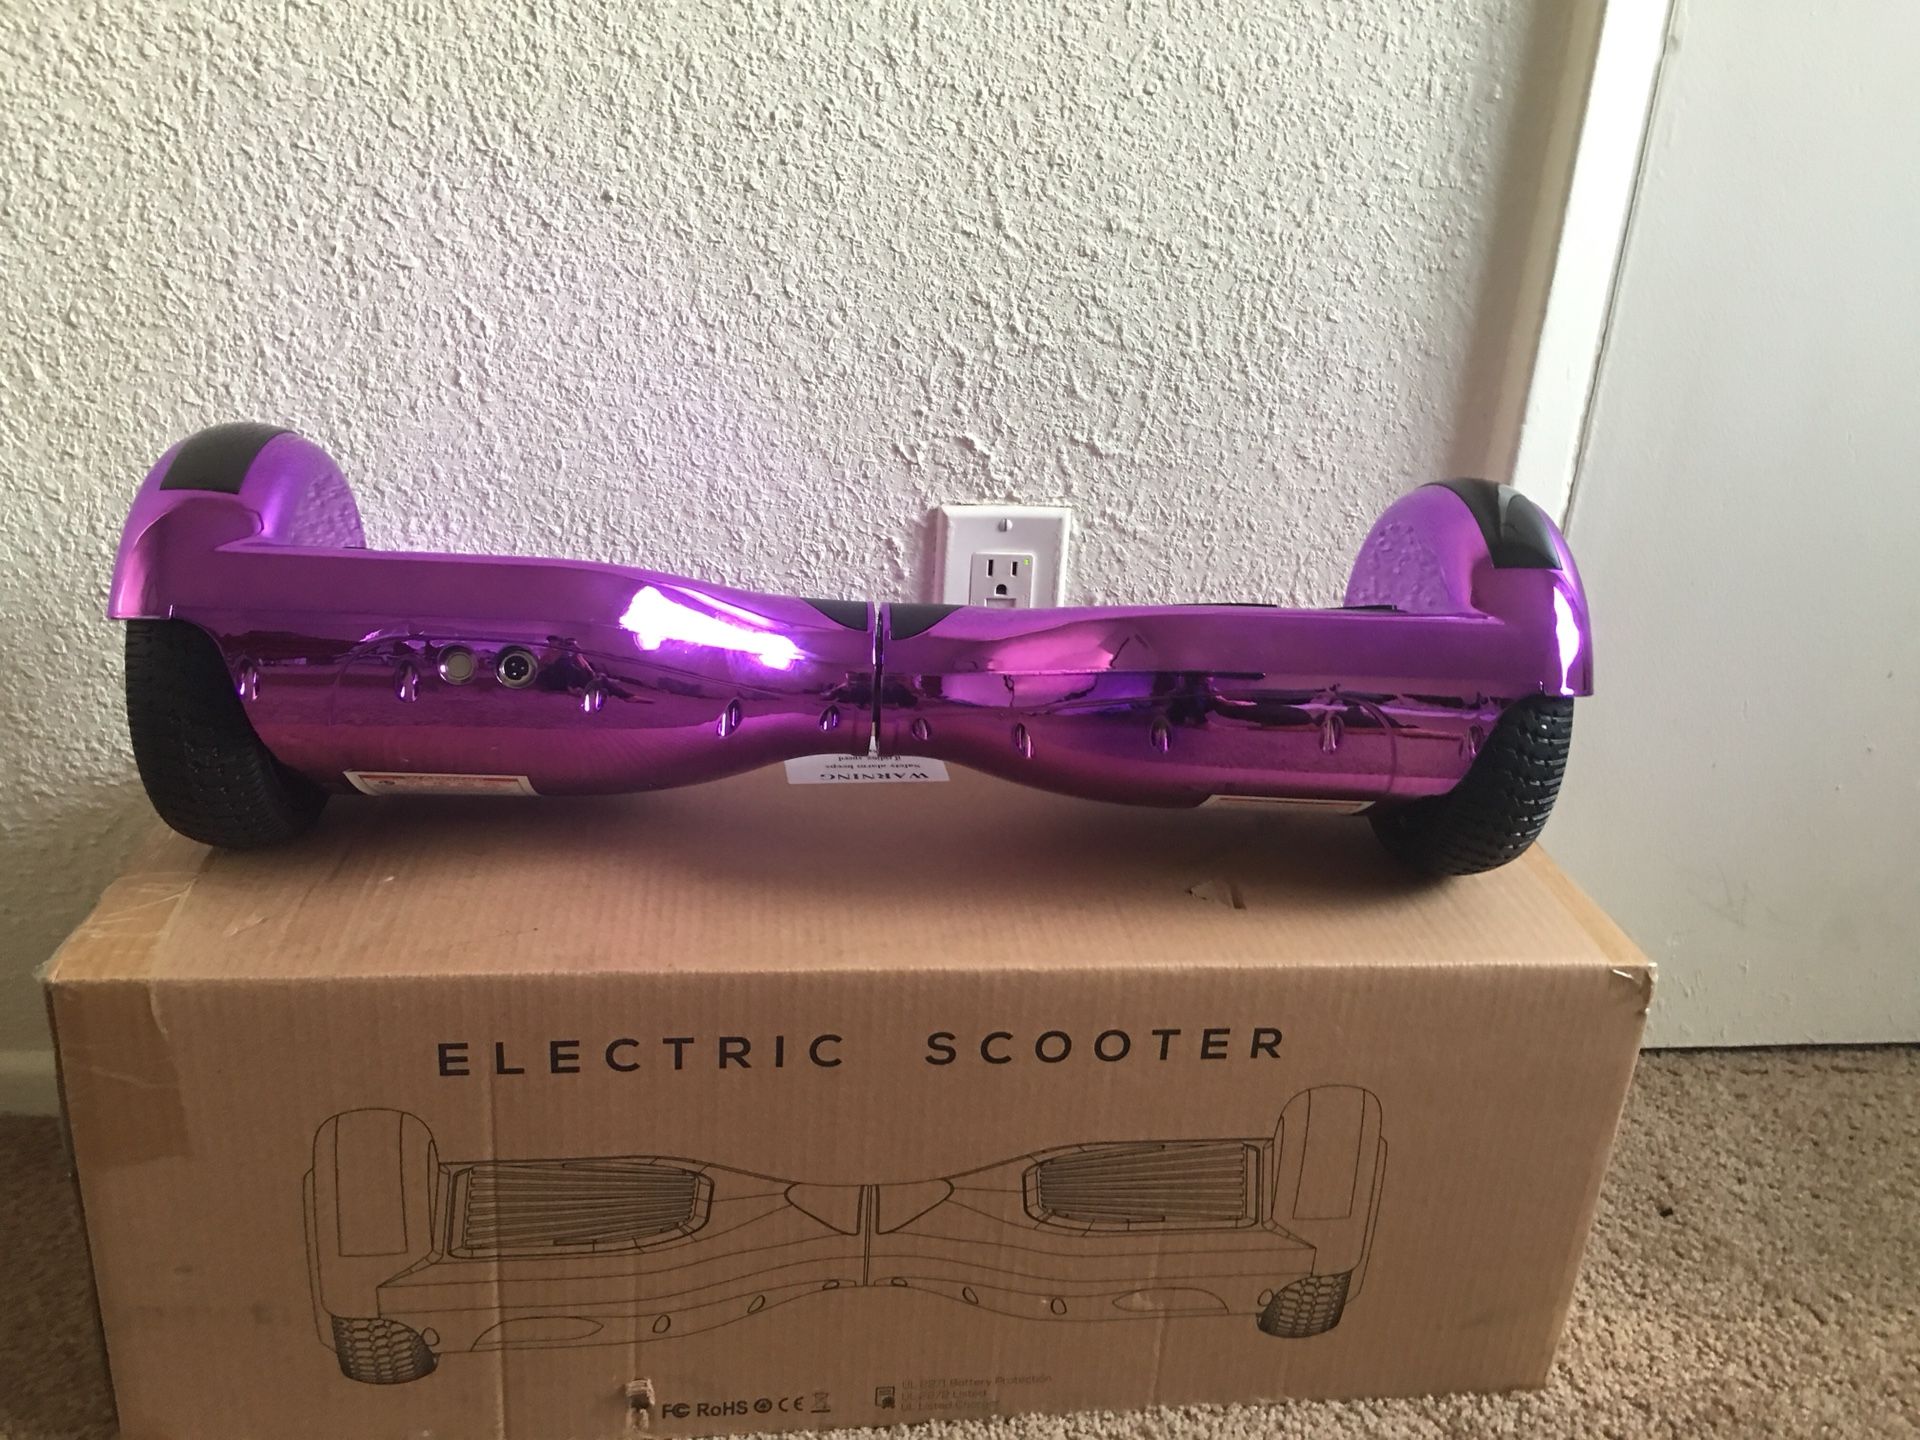 Brand new purple metallic hoverboard